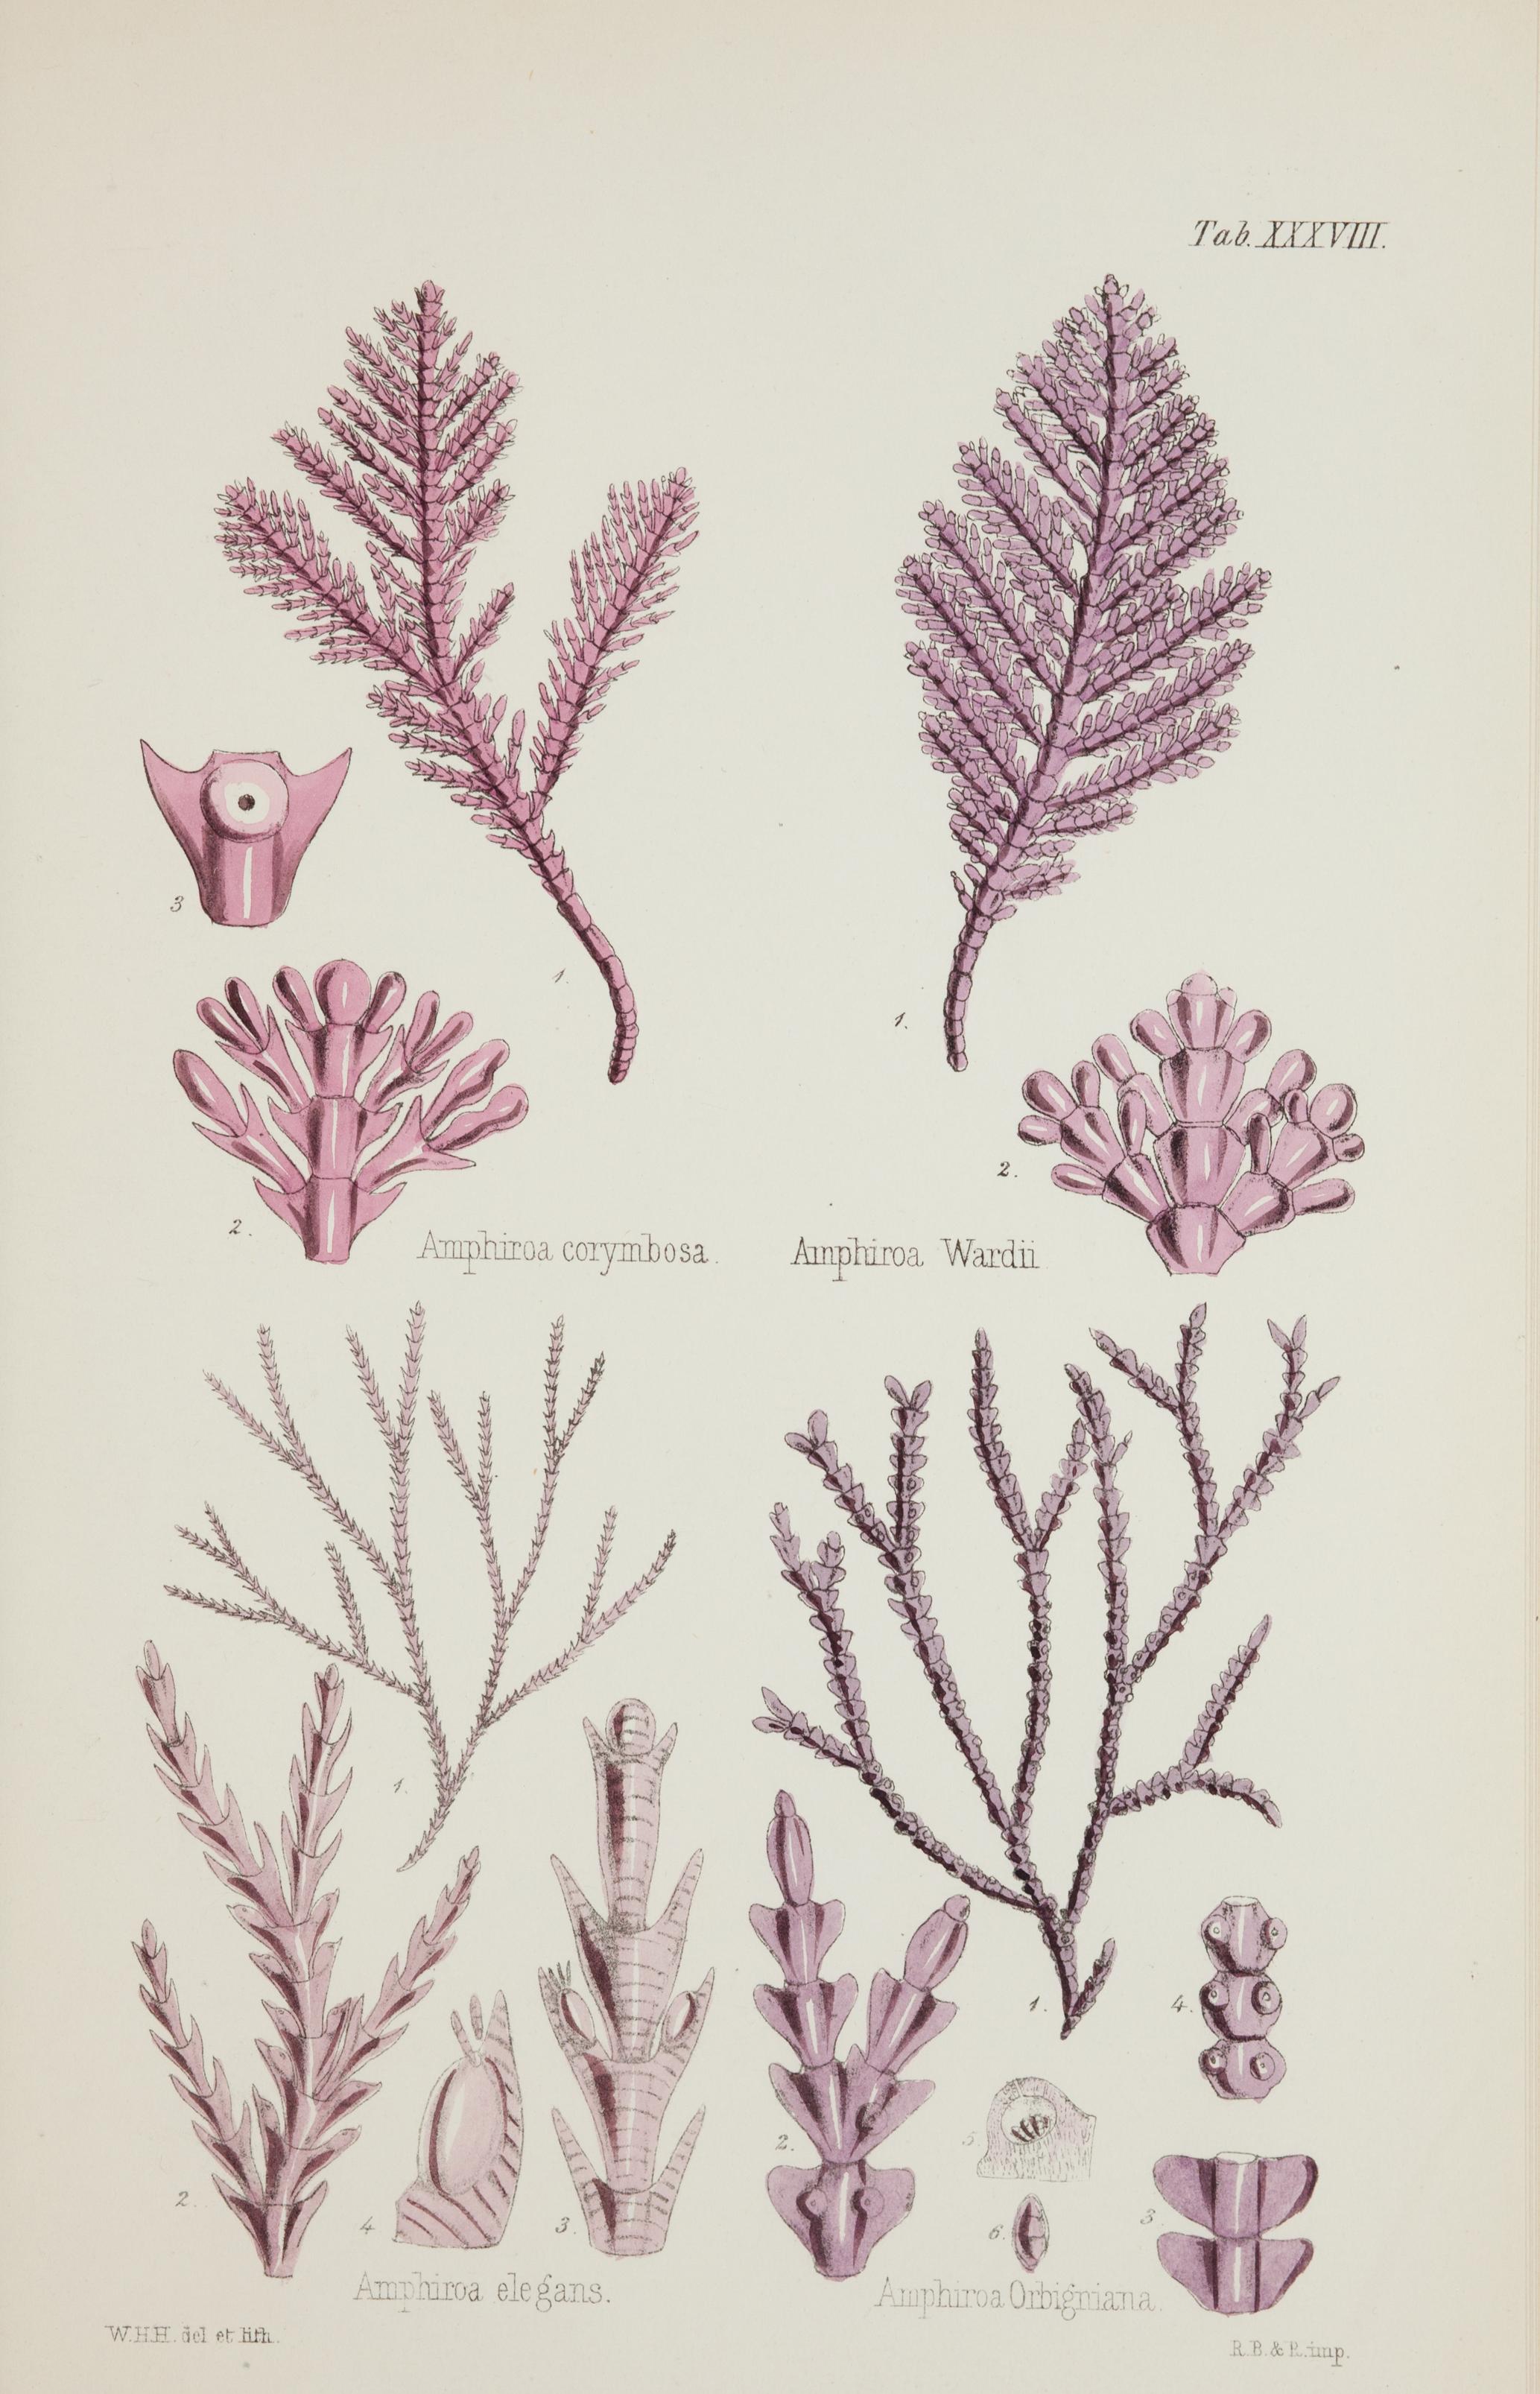 Nereis australis, or Algae of the southern ocean BHL46201249